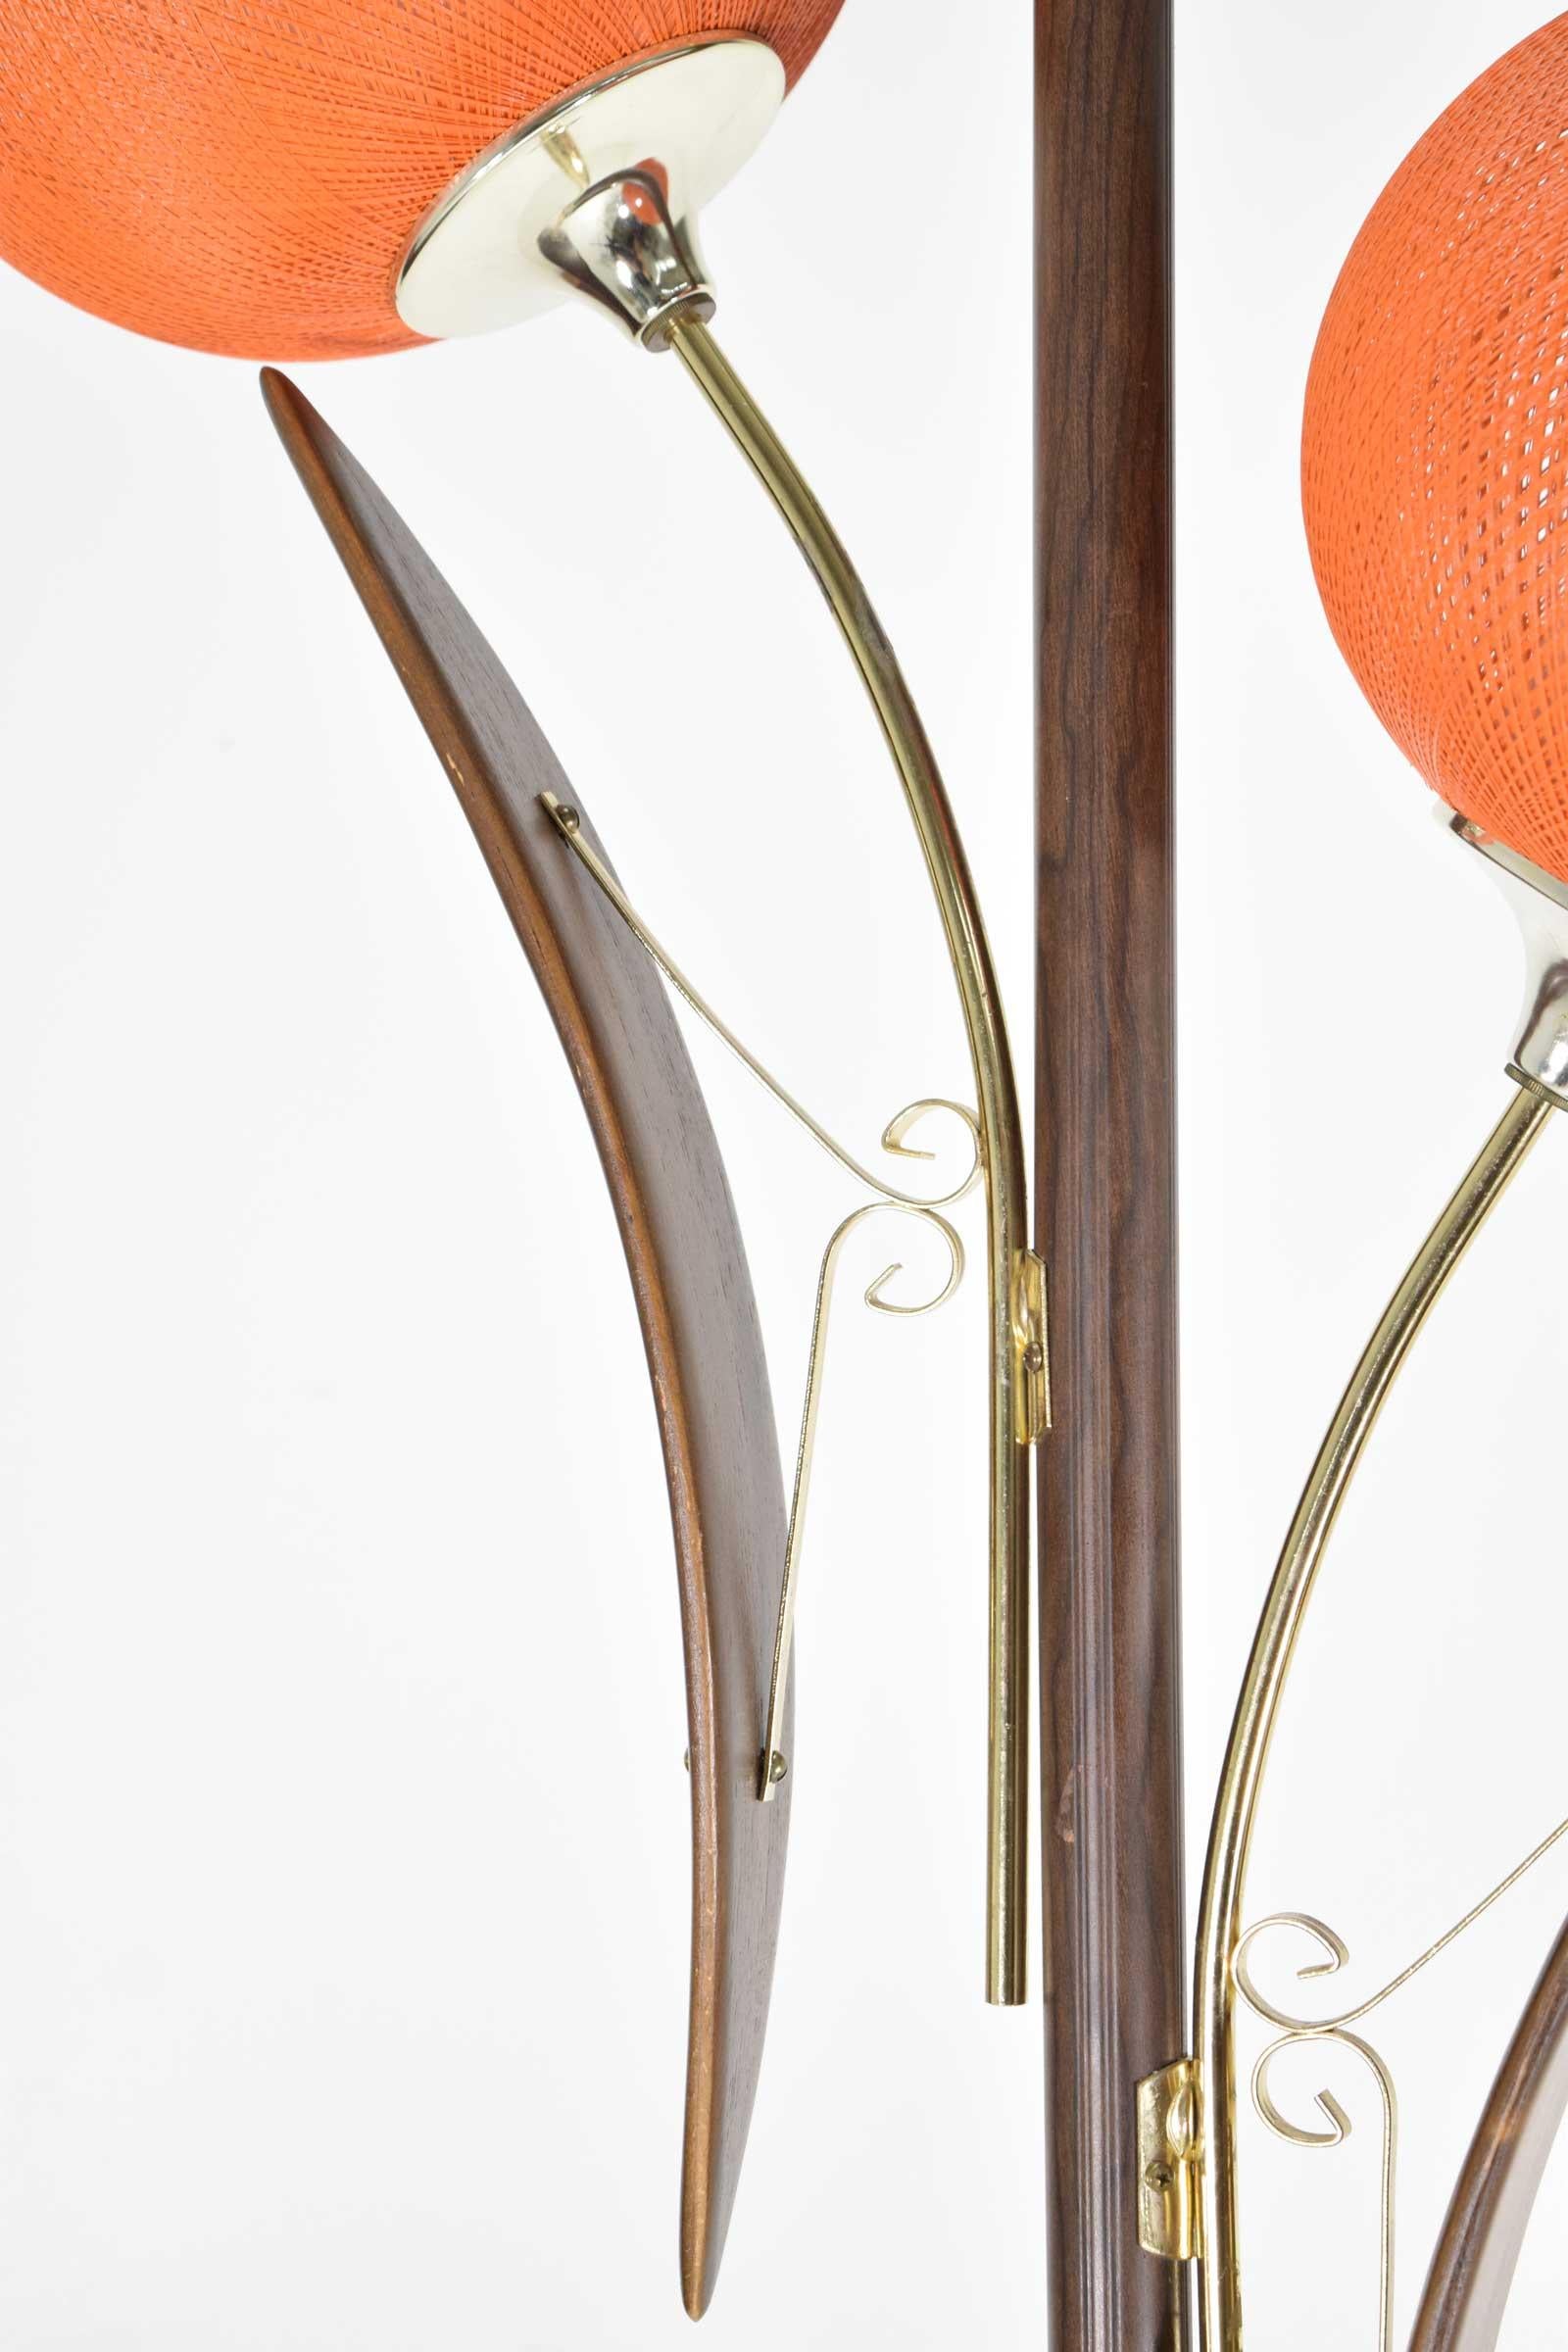 Mid-Century Modern Midcentury Tension Pole Lamp with Spun Fiberglass Shades